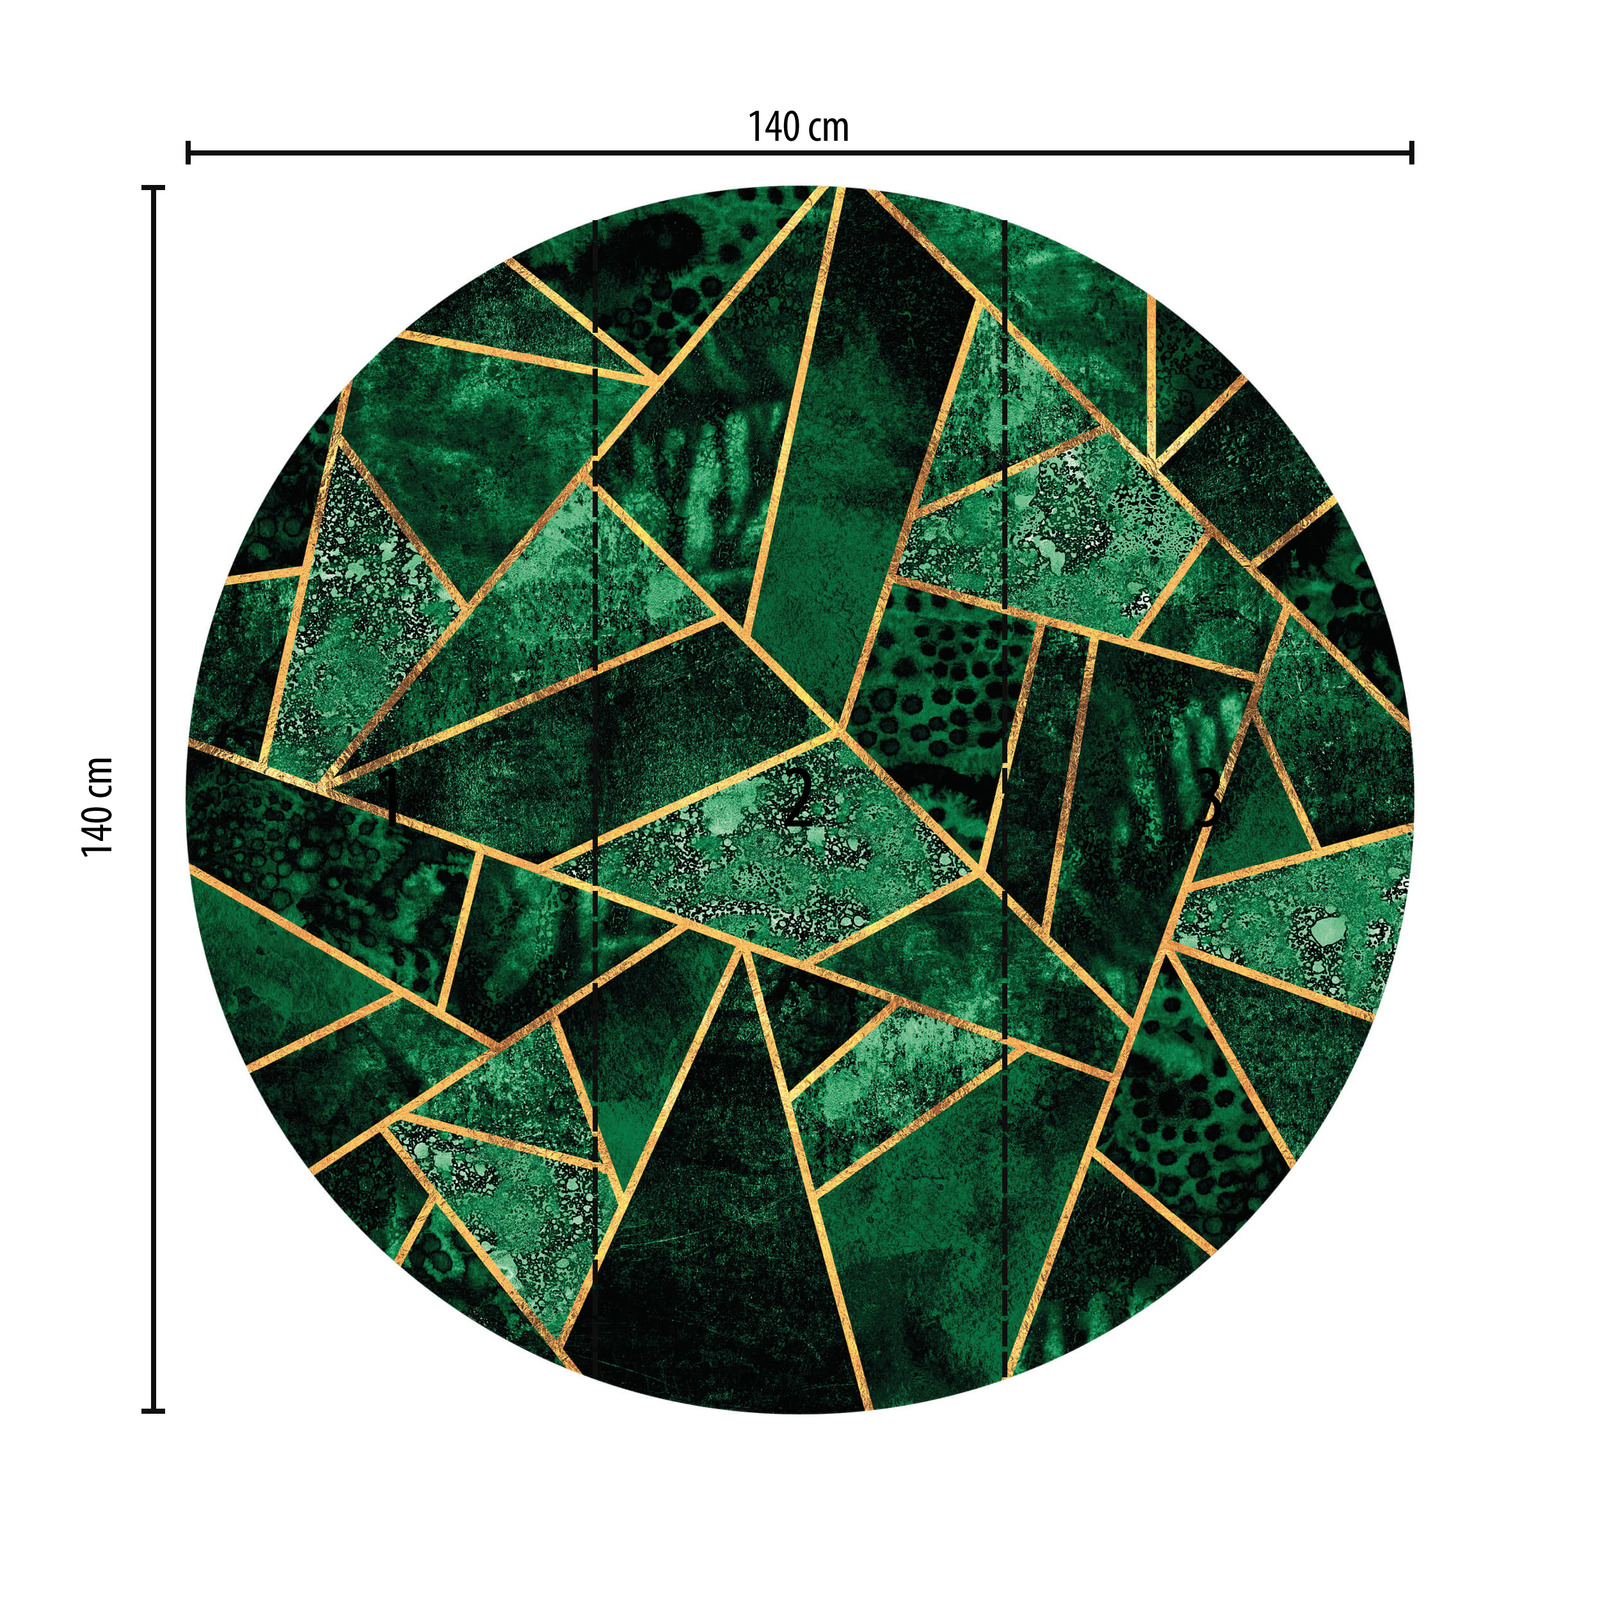             Fotomurali forme geometriche rotonde, verde
        